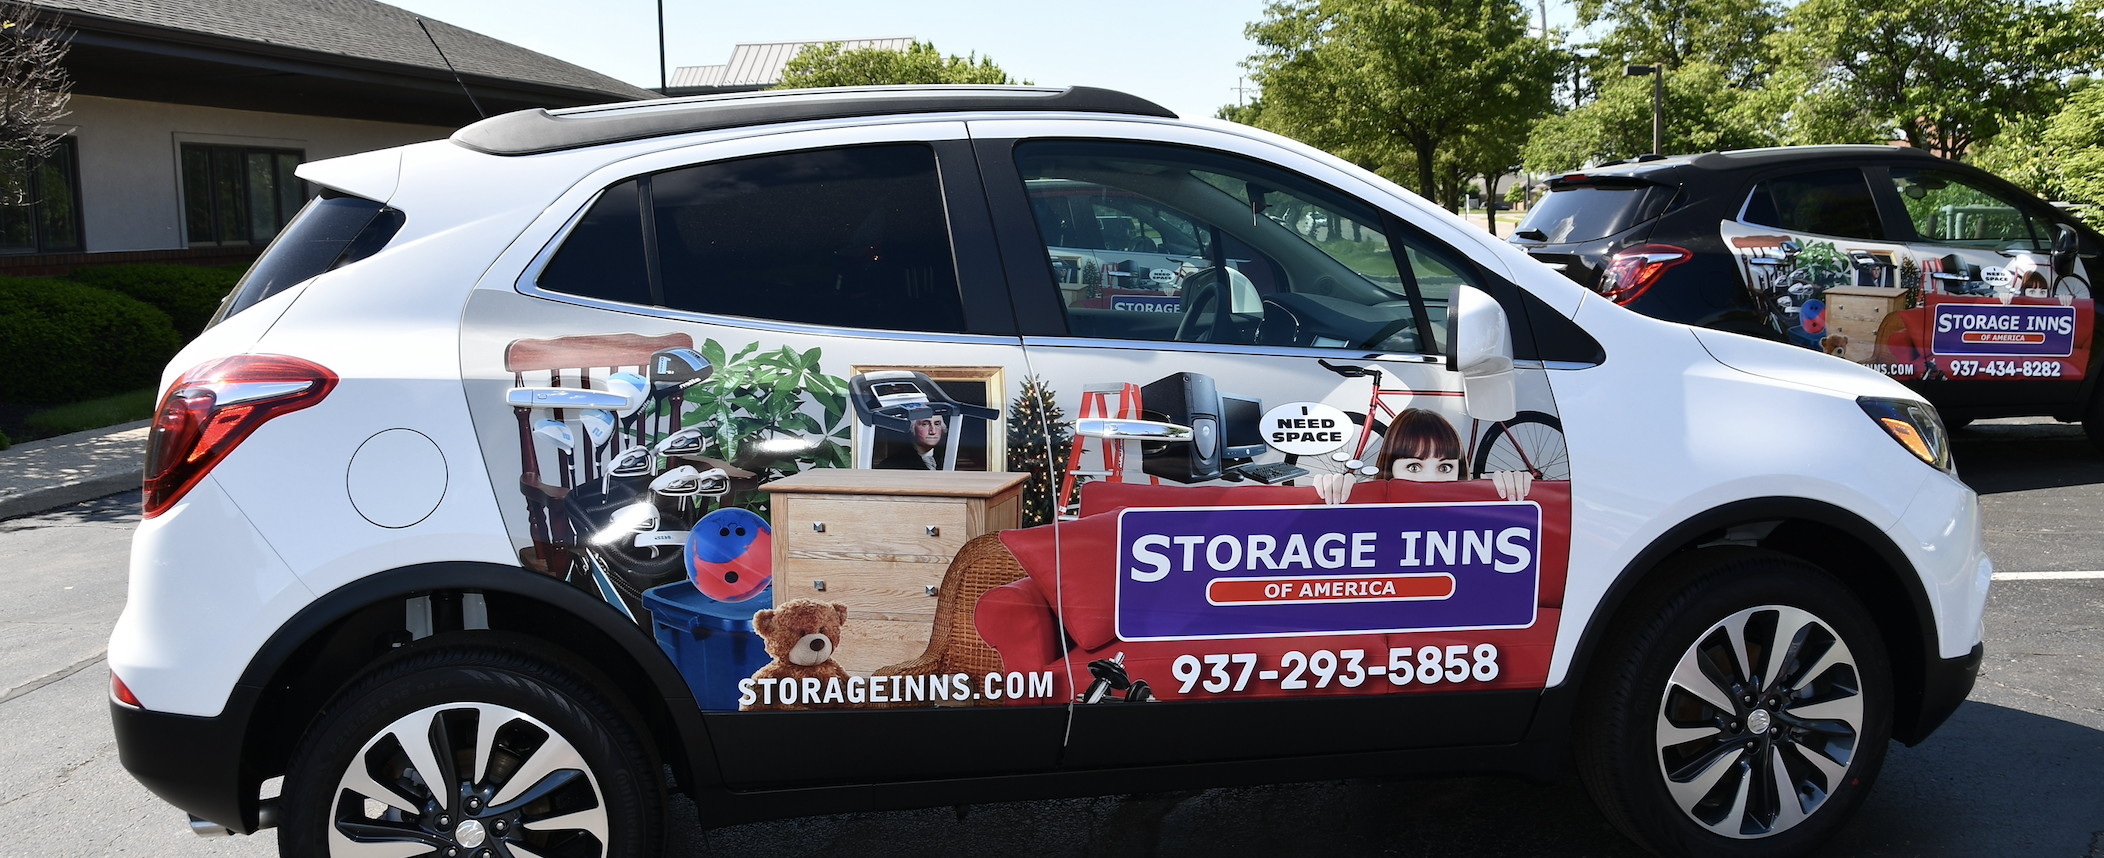 Car wrap Storage Inns of America